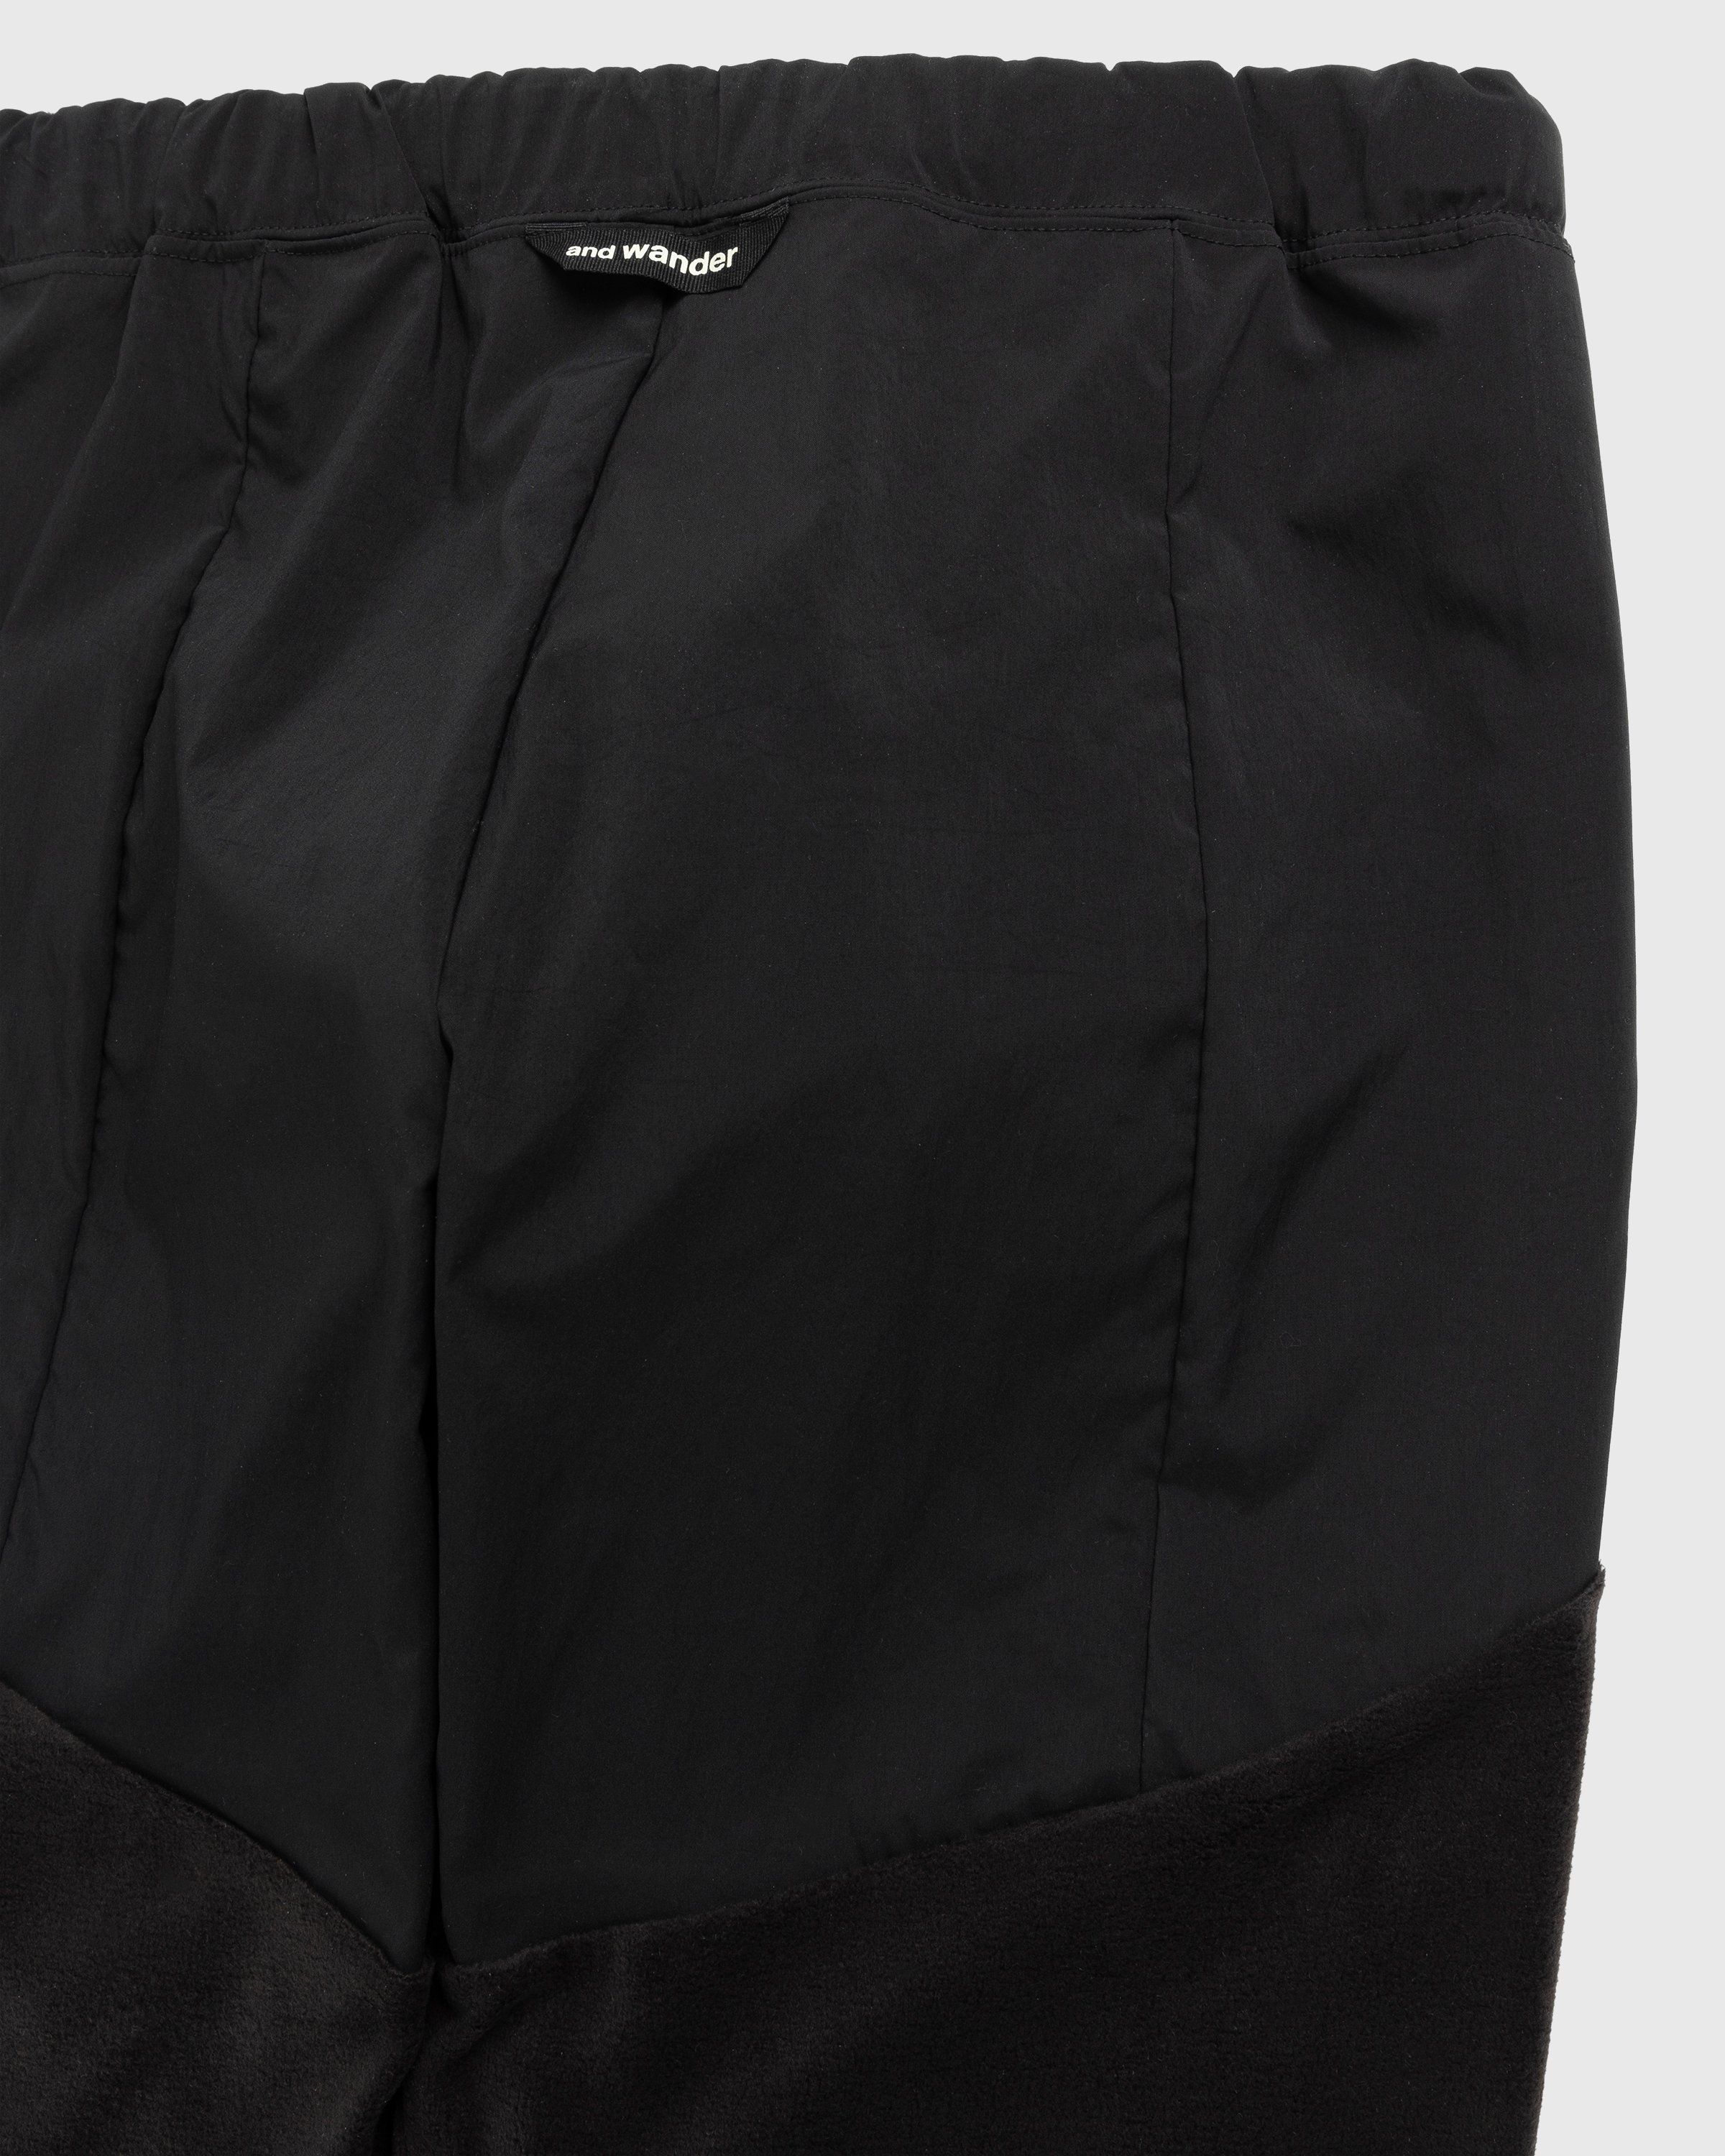 And Wander - Fleece Base Pants Black - Clothing - Black - Image 4